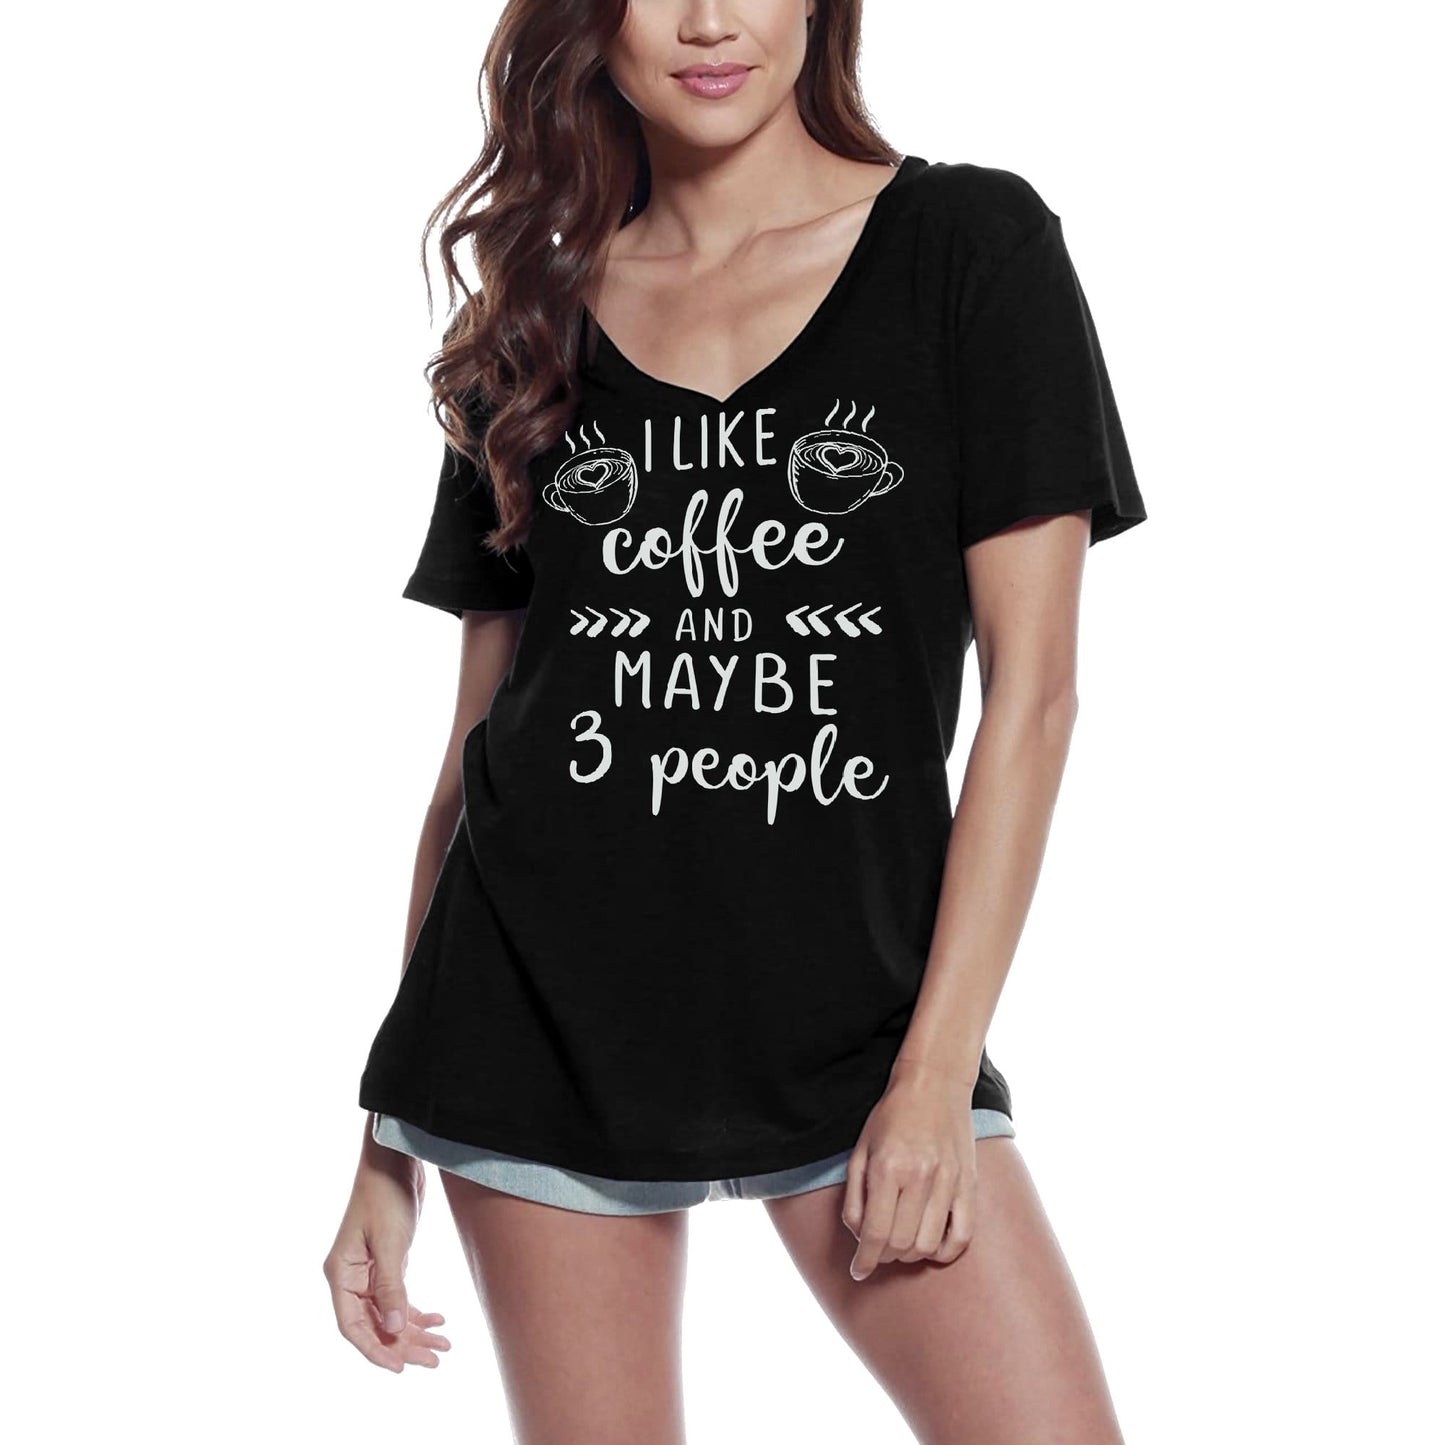 ULTRABASIC Women's T-Shirt I Like Coffee and Maybe 3 People - Short Sleeve Tee Shirt Tops